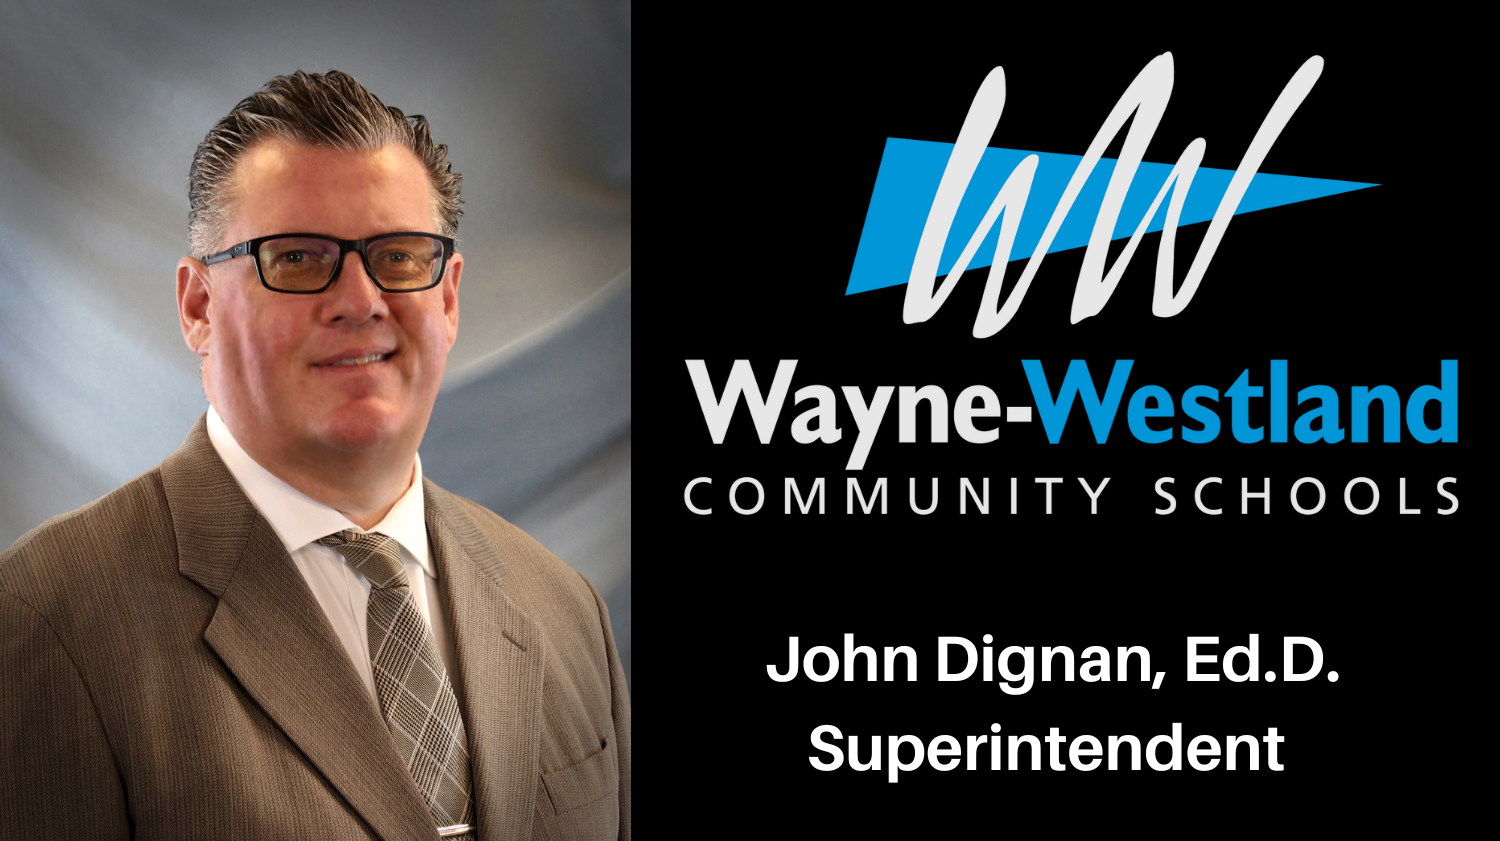 Superintendent John Dignan